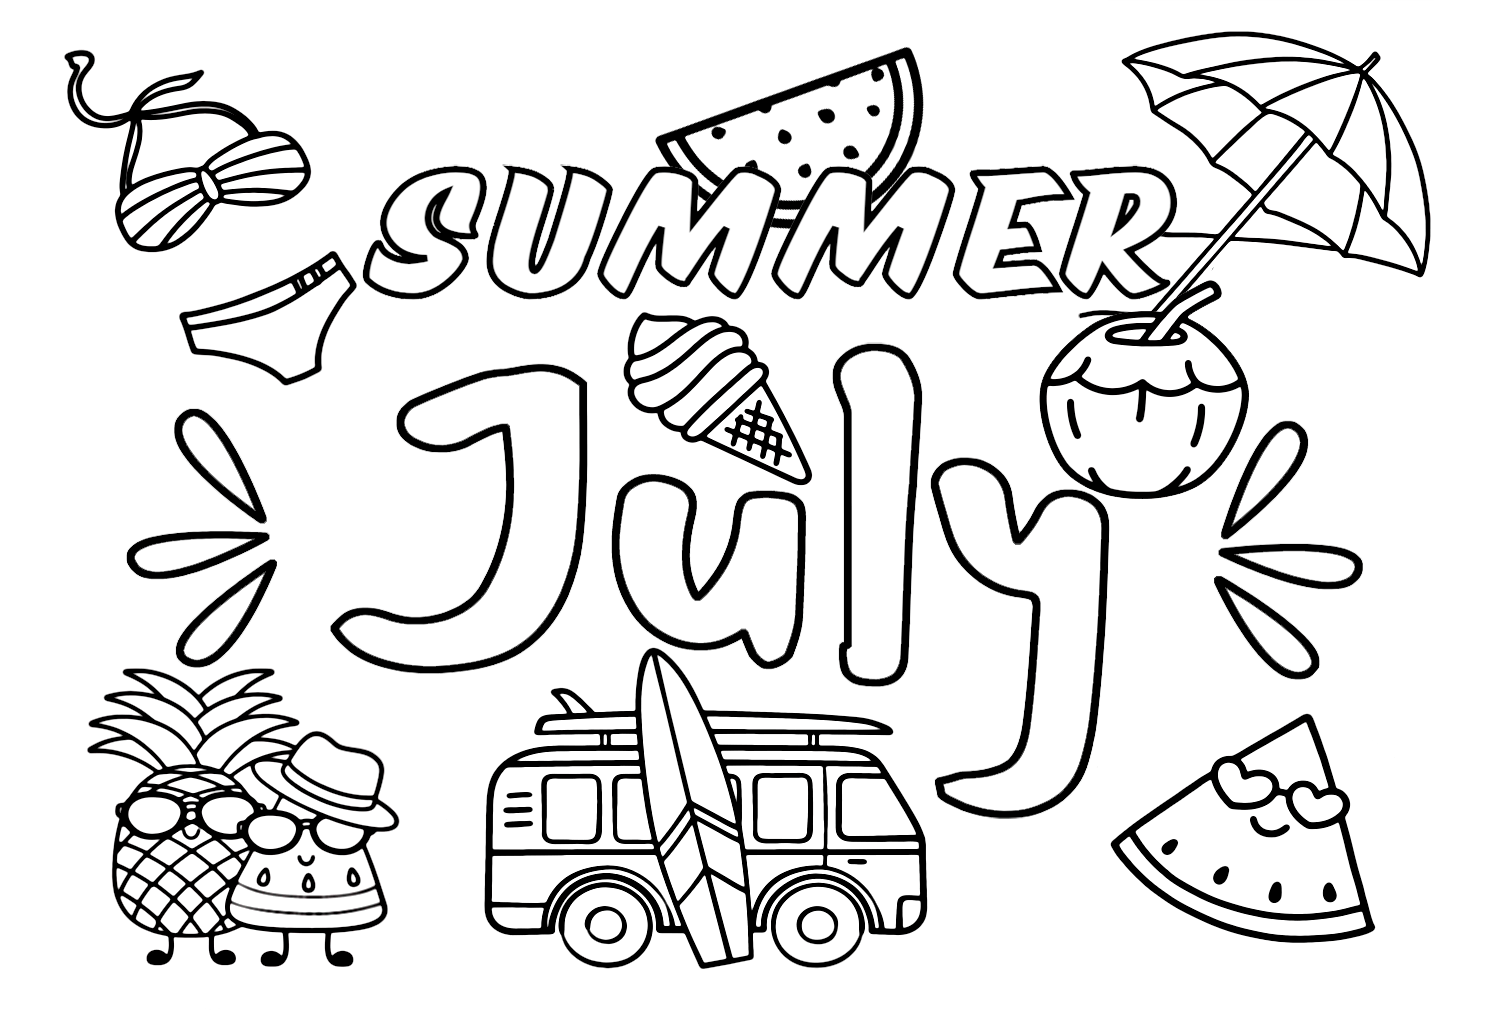 Verano julio desde julio